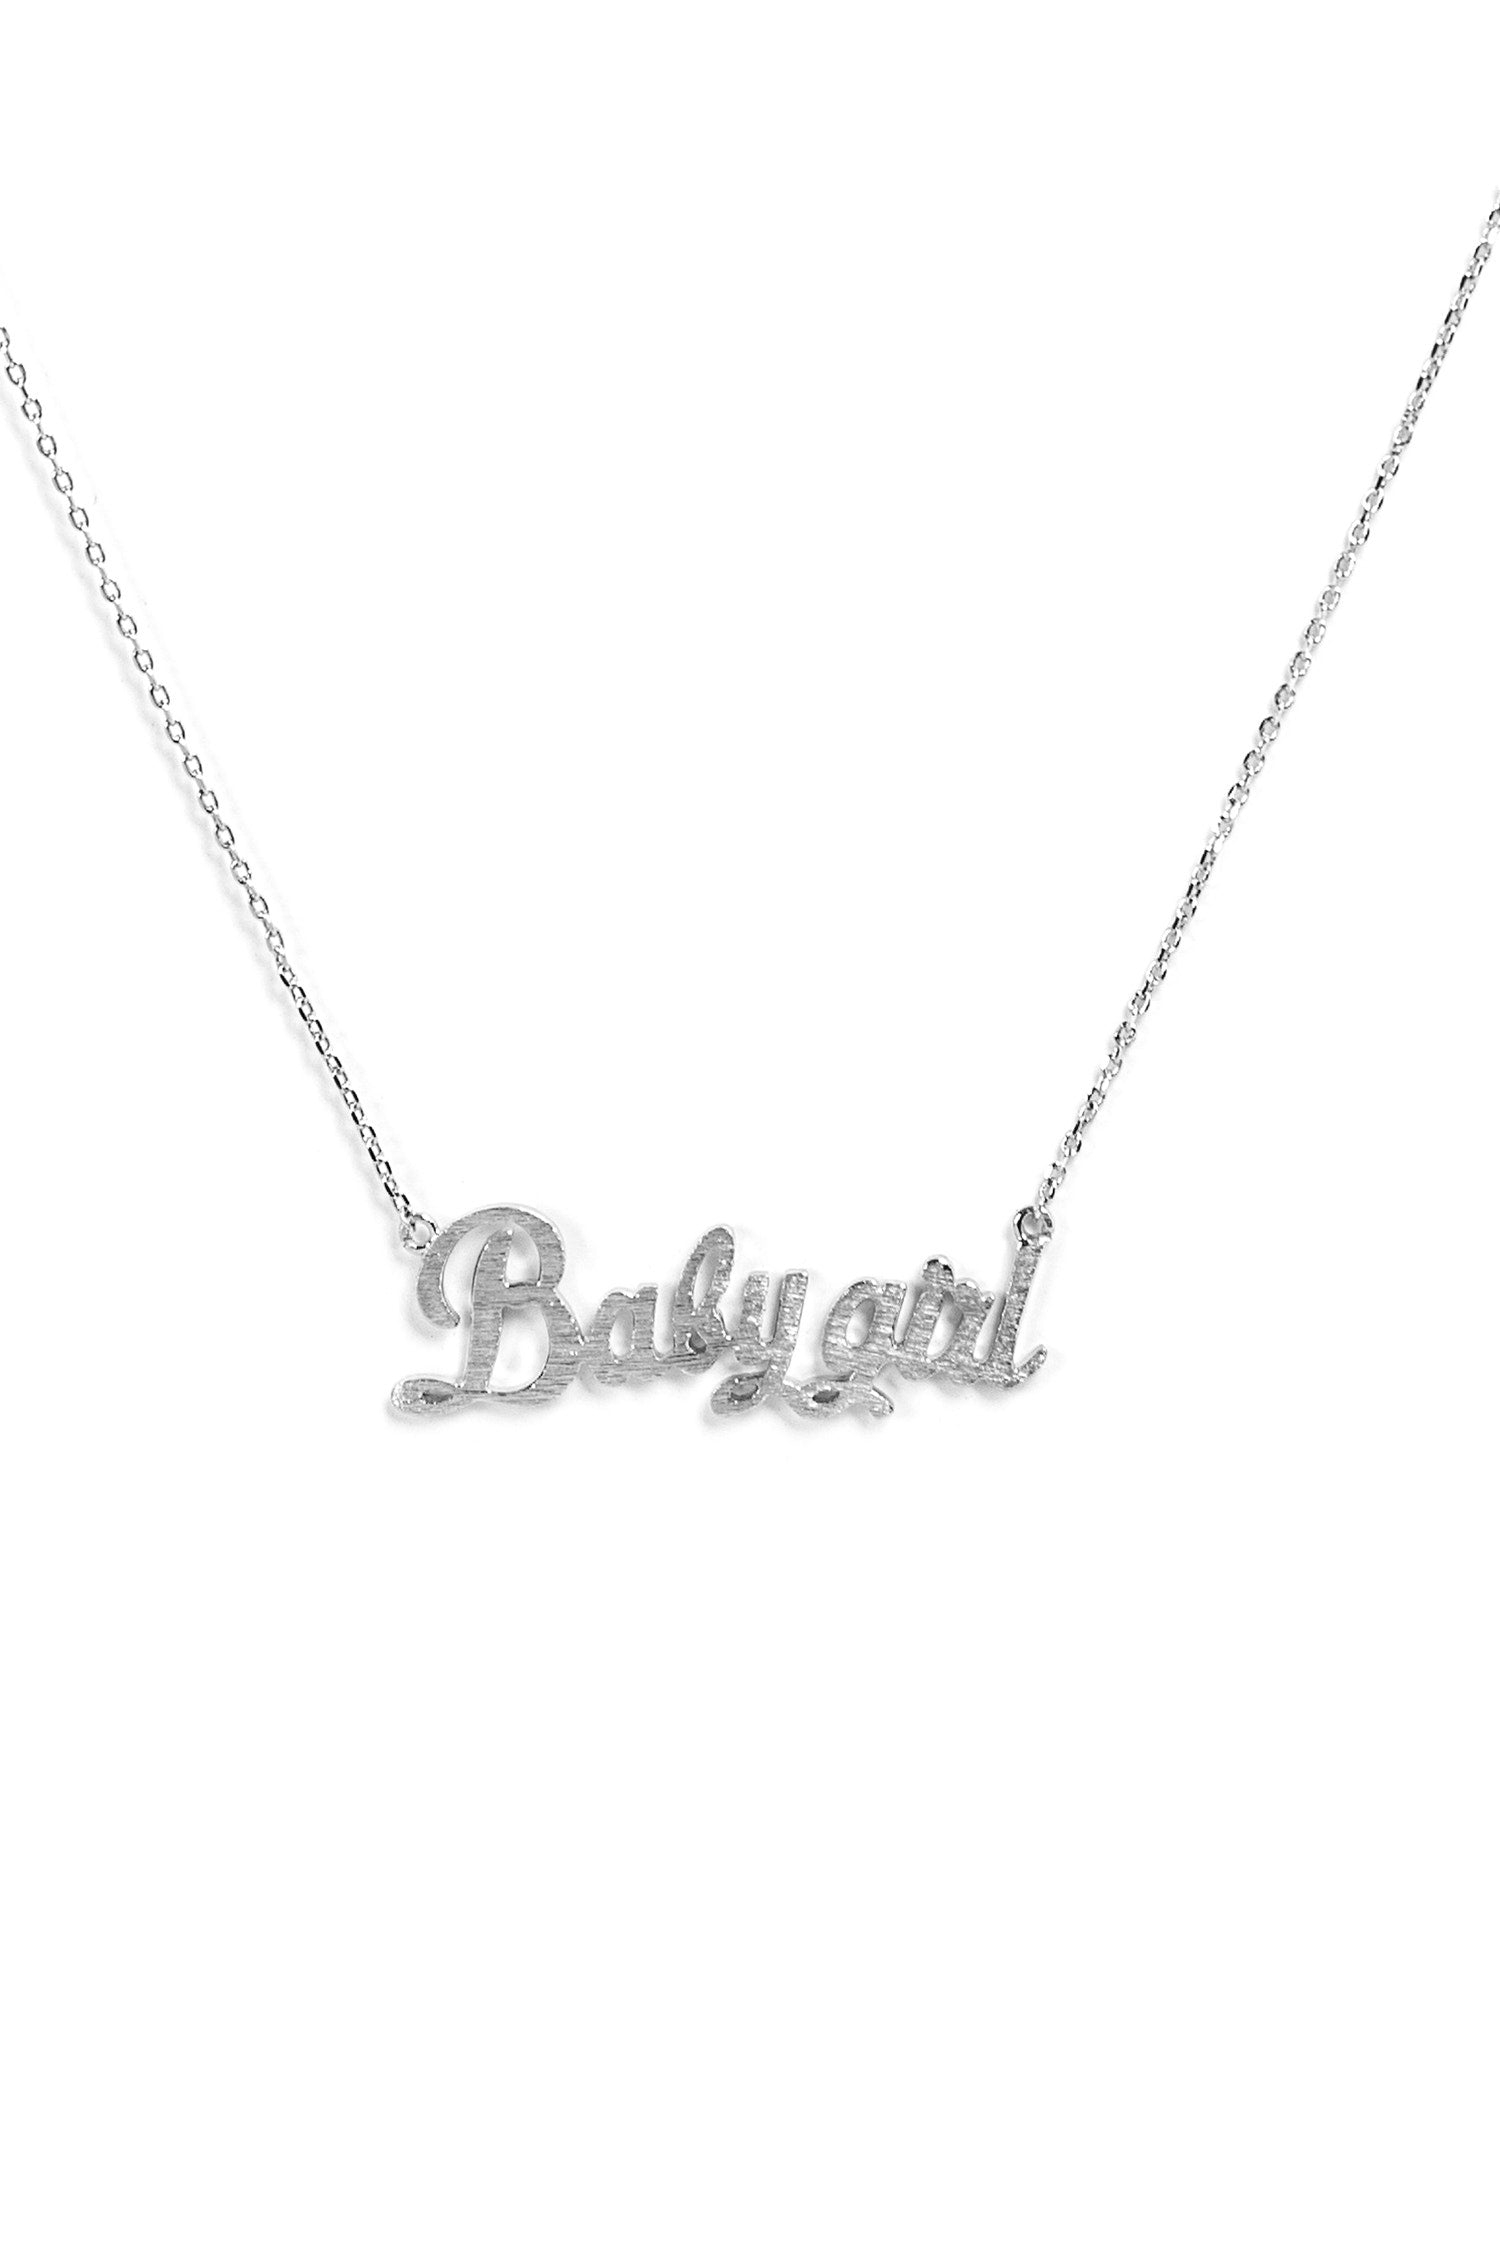 Baby Girl Script Necklace